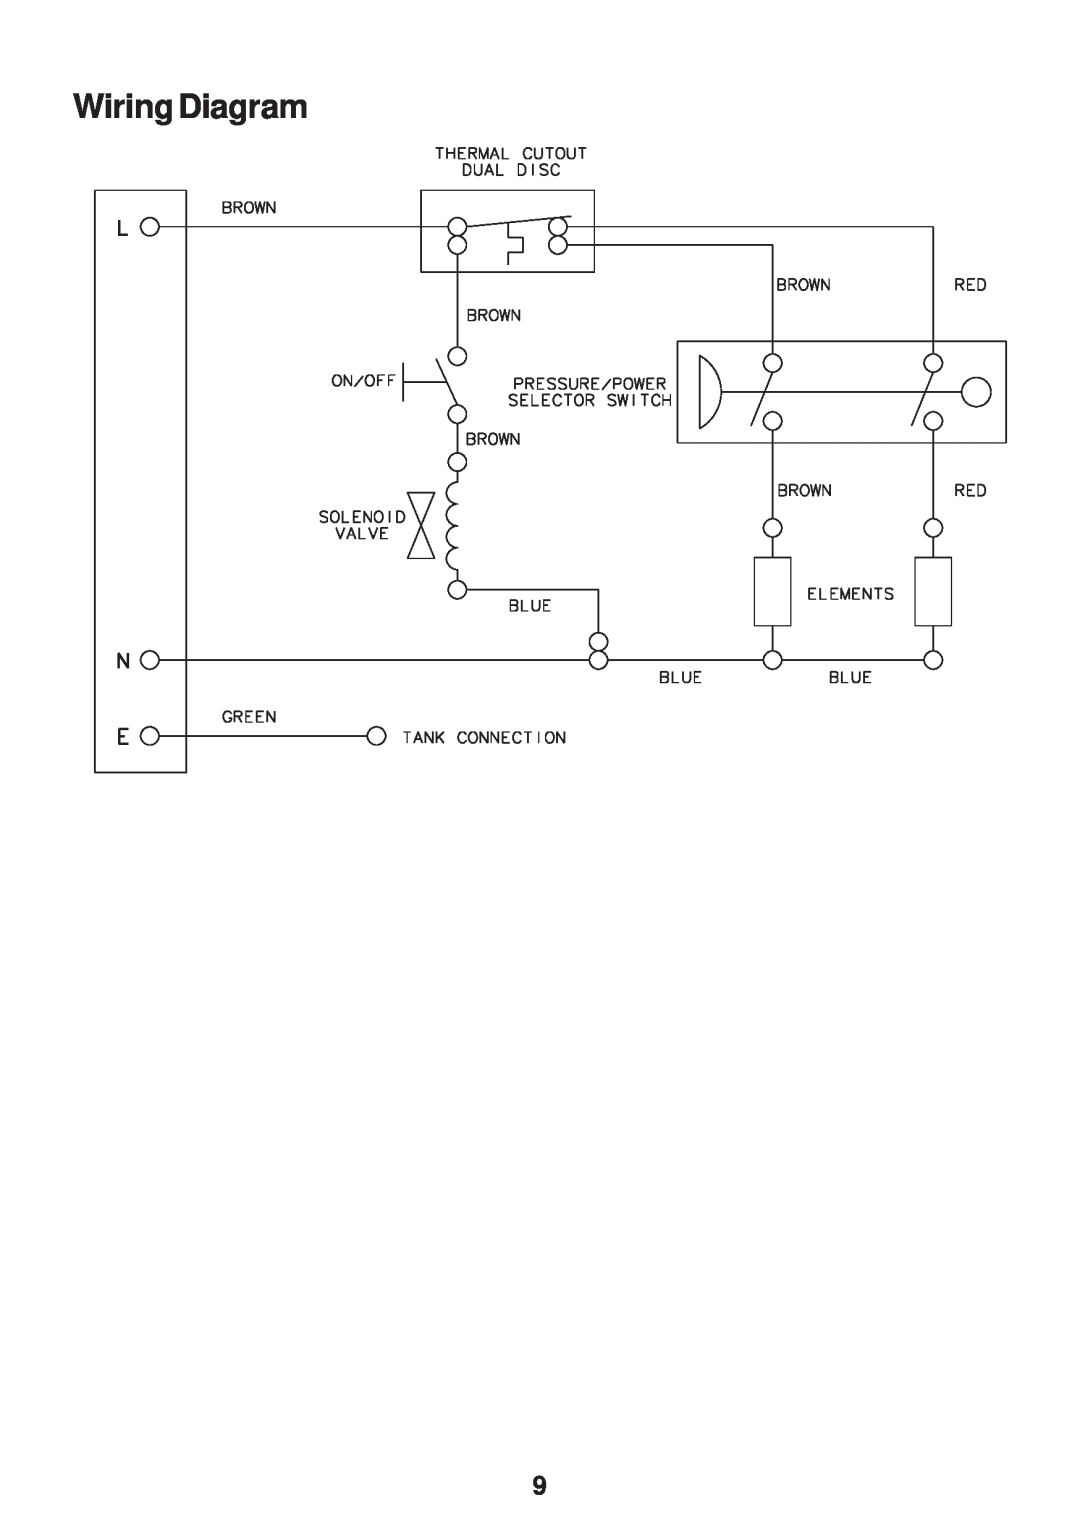 Kohler Electric Shower manual WiringDiagram 